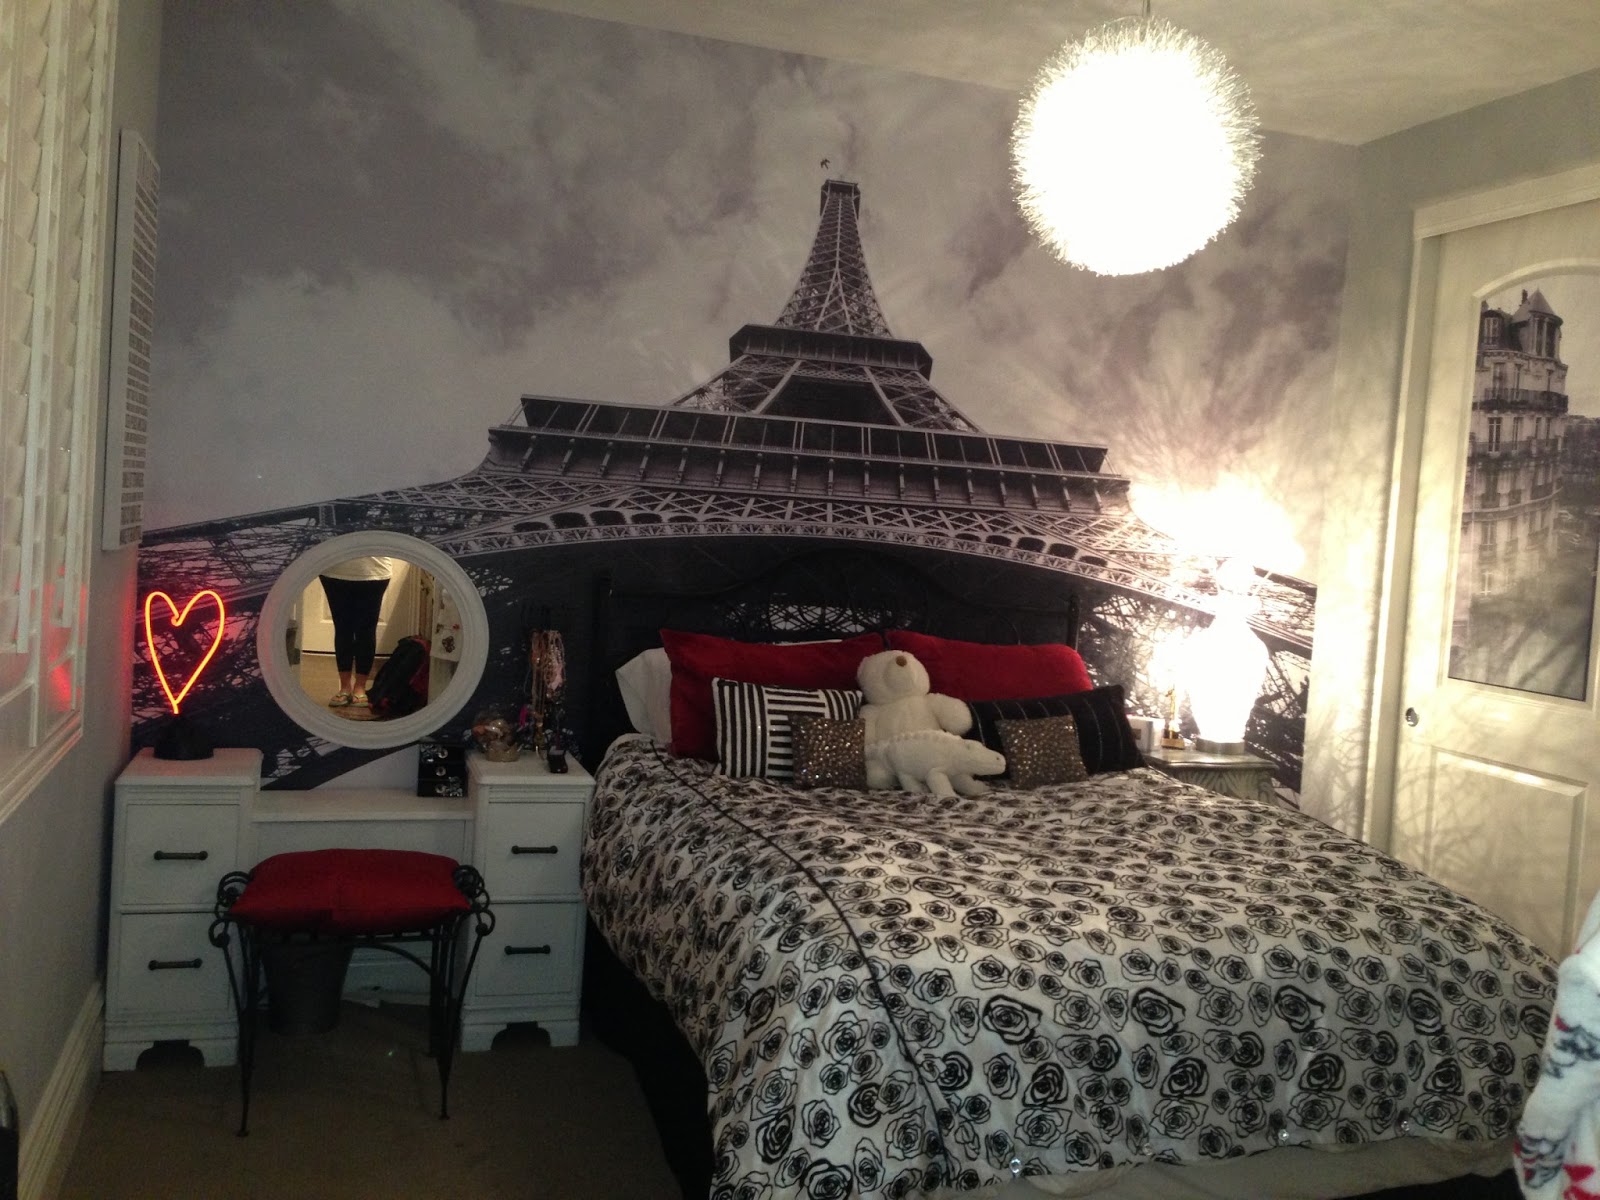 Dee's Adventures: Kate's Paris Themed Room